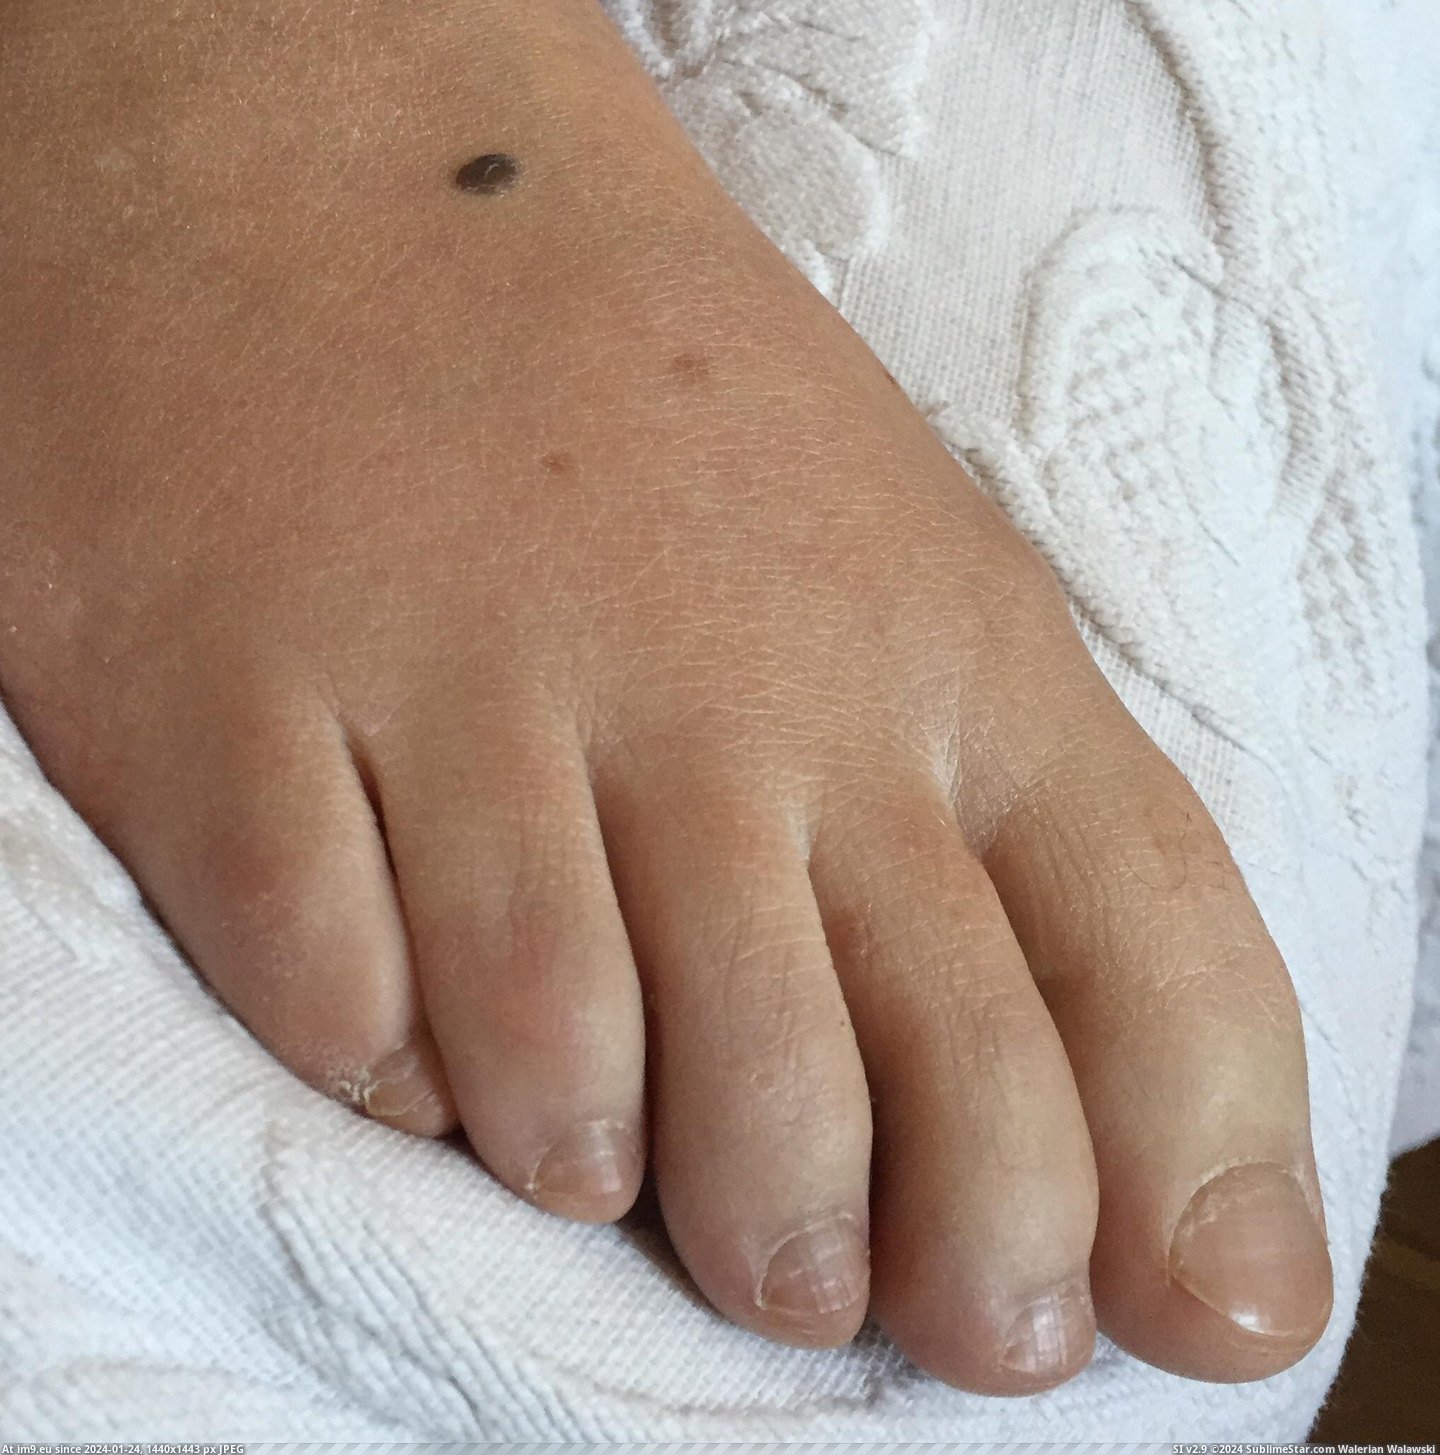 #Wife  #Italian serefeet0114 Pic. (Image of album Italian wife feet))